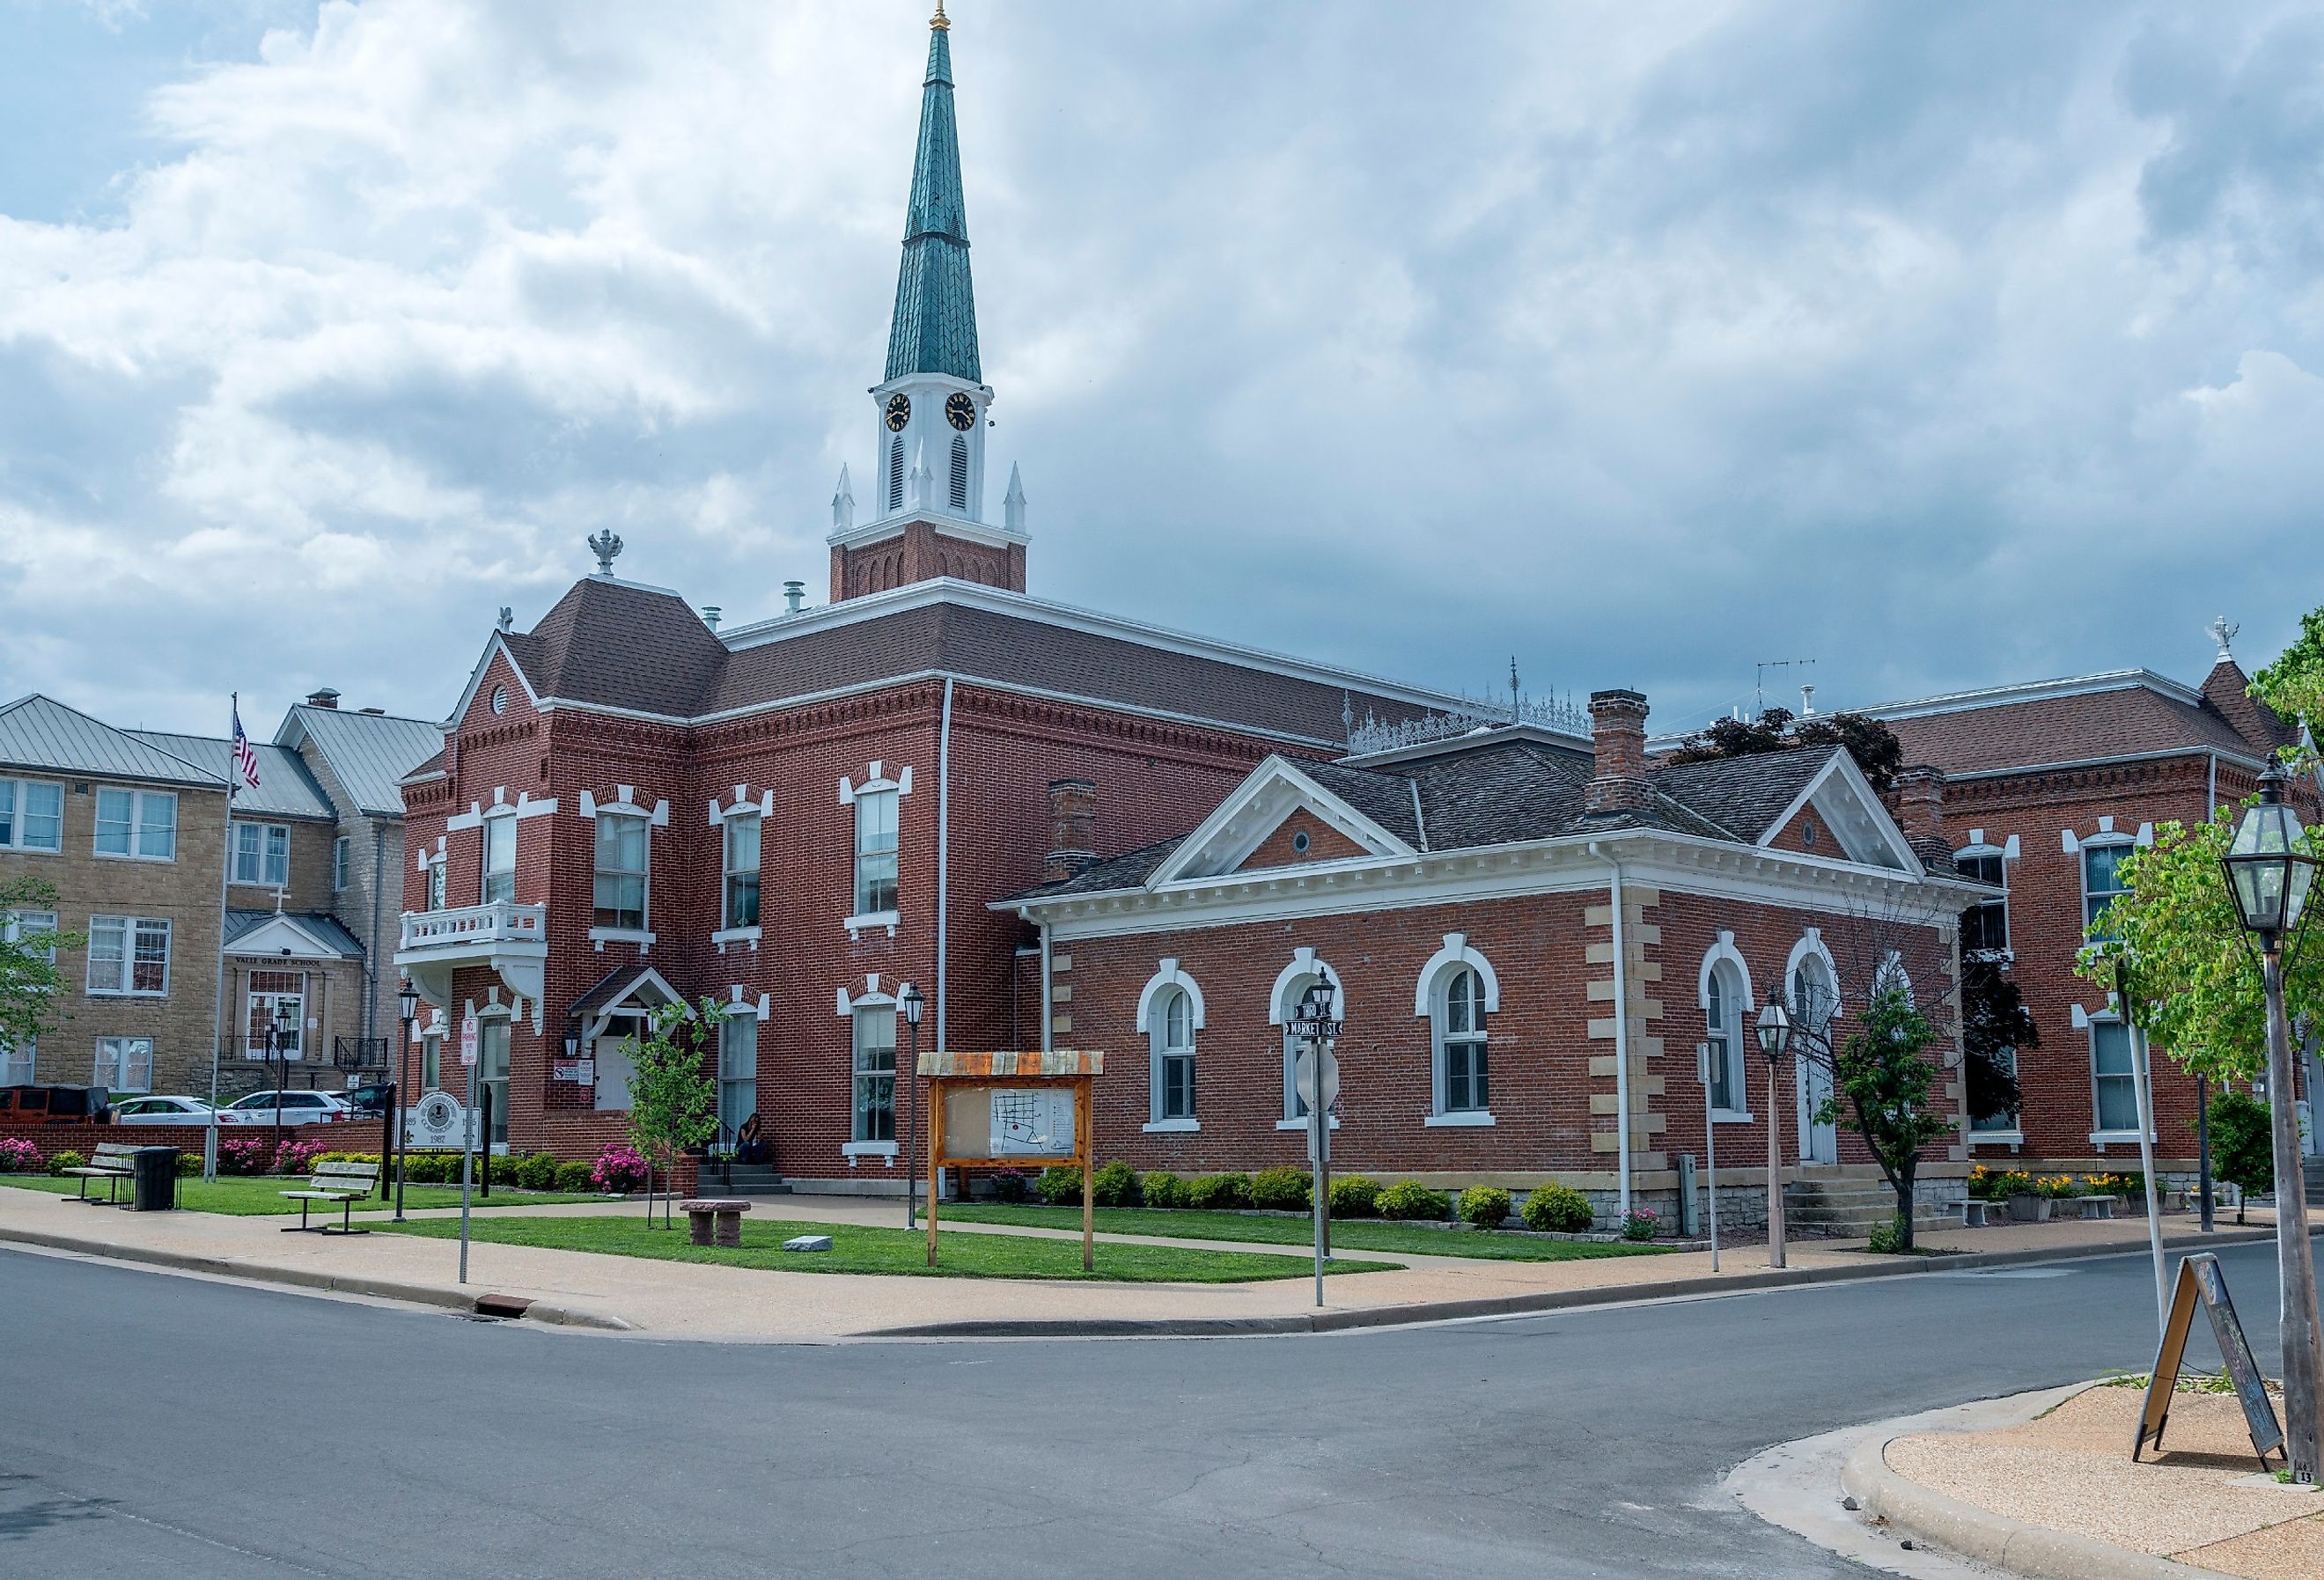 Sainte Genevieve County Courthouse in downtown Sainte Genevieve, Missouri. Image credit Malachi Jacobs via Shutterstock